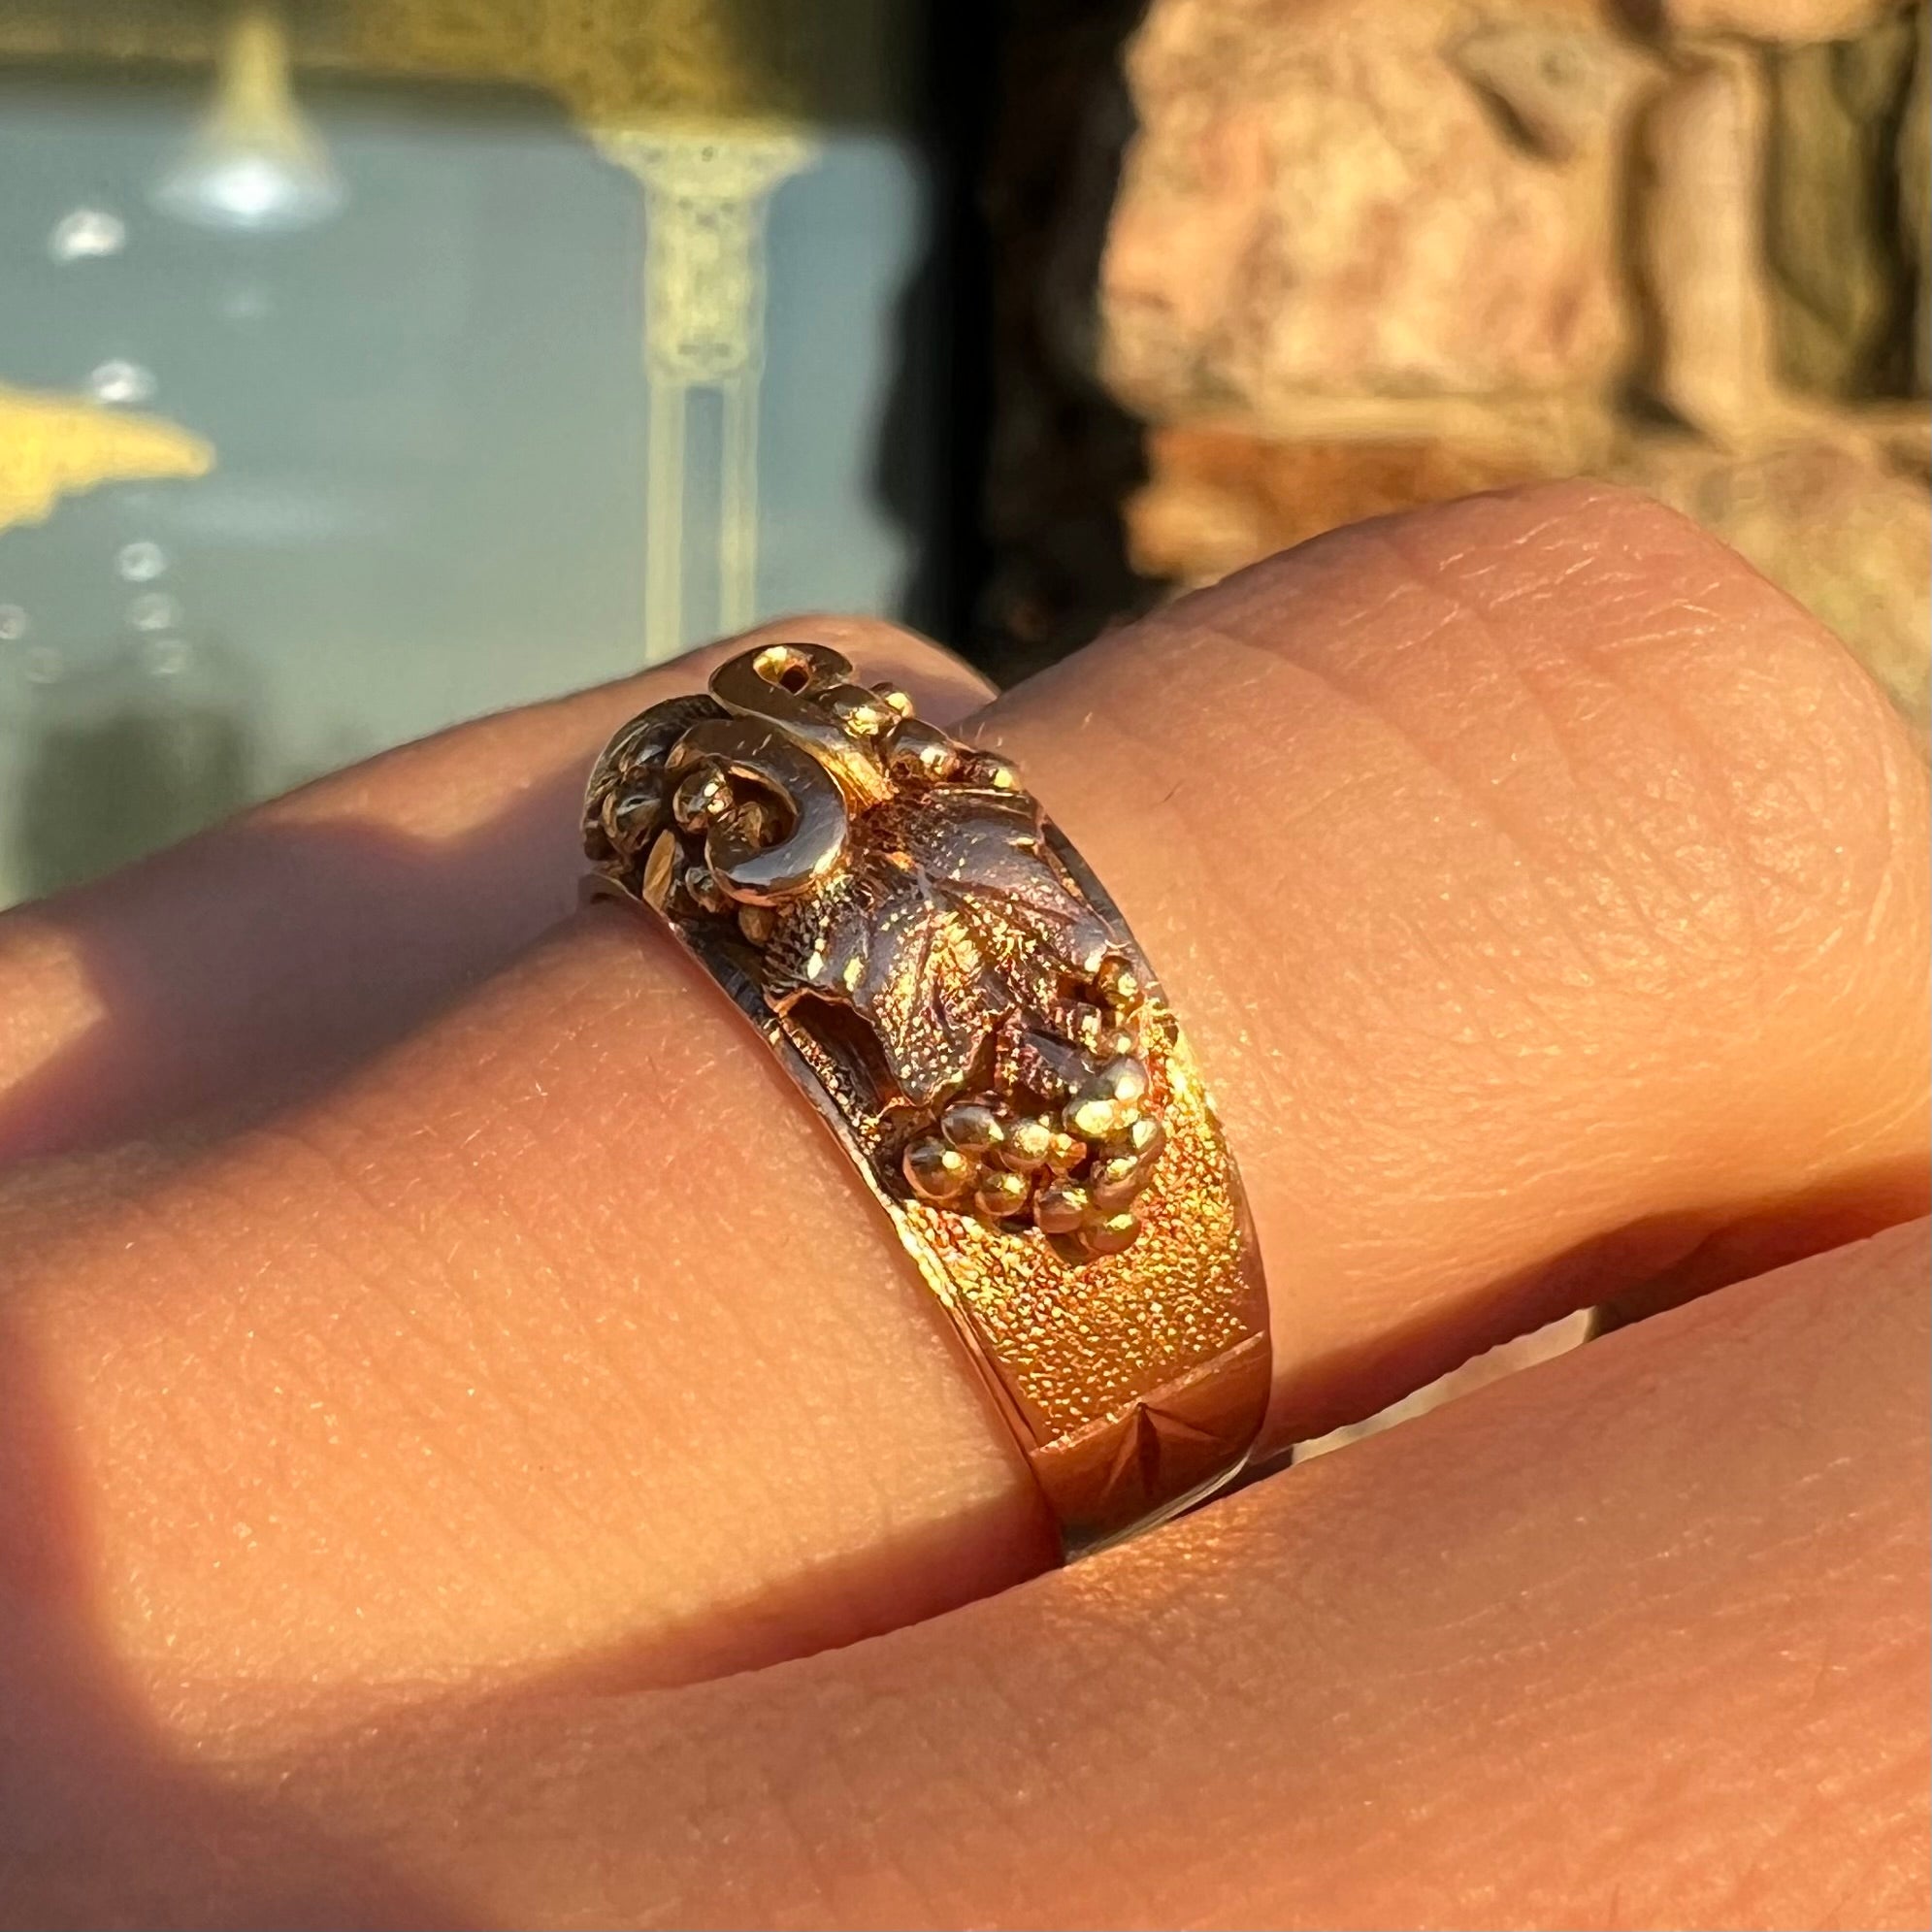 Twin Hearts and Diamond - Black Hills Gold Ladies Ring | Black hills gold  jewelry, Black hills gold rings, Black hills gold